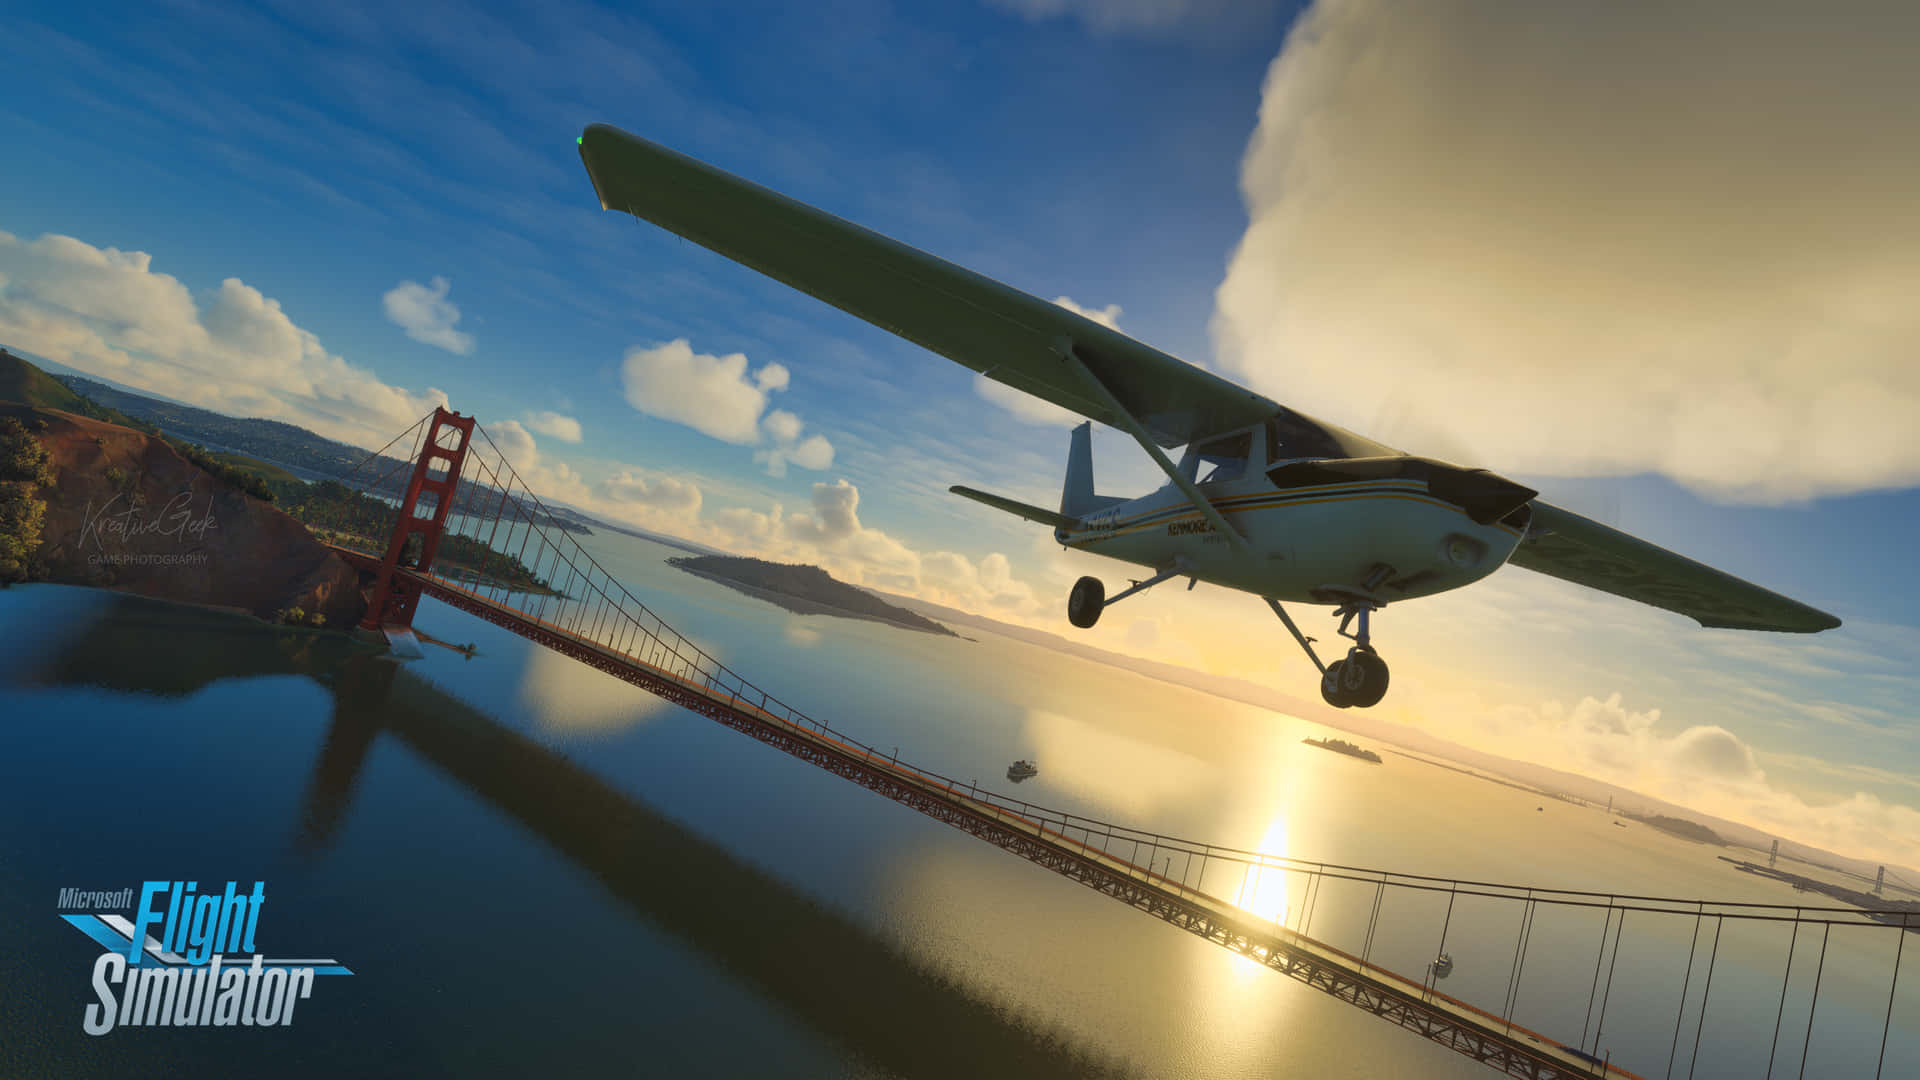 Vistaaerea Spettacolare In 4k - Microsoft Flight Simulator